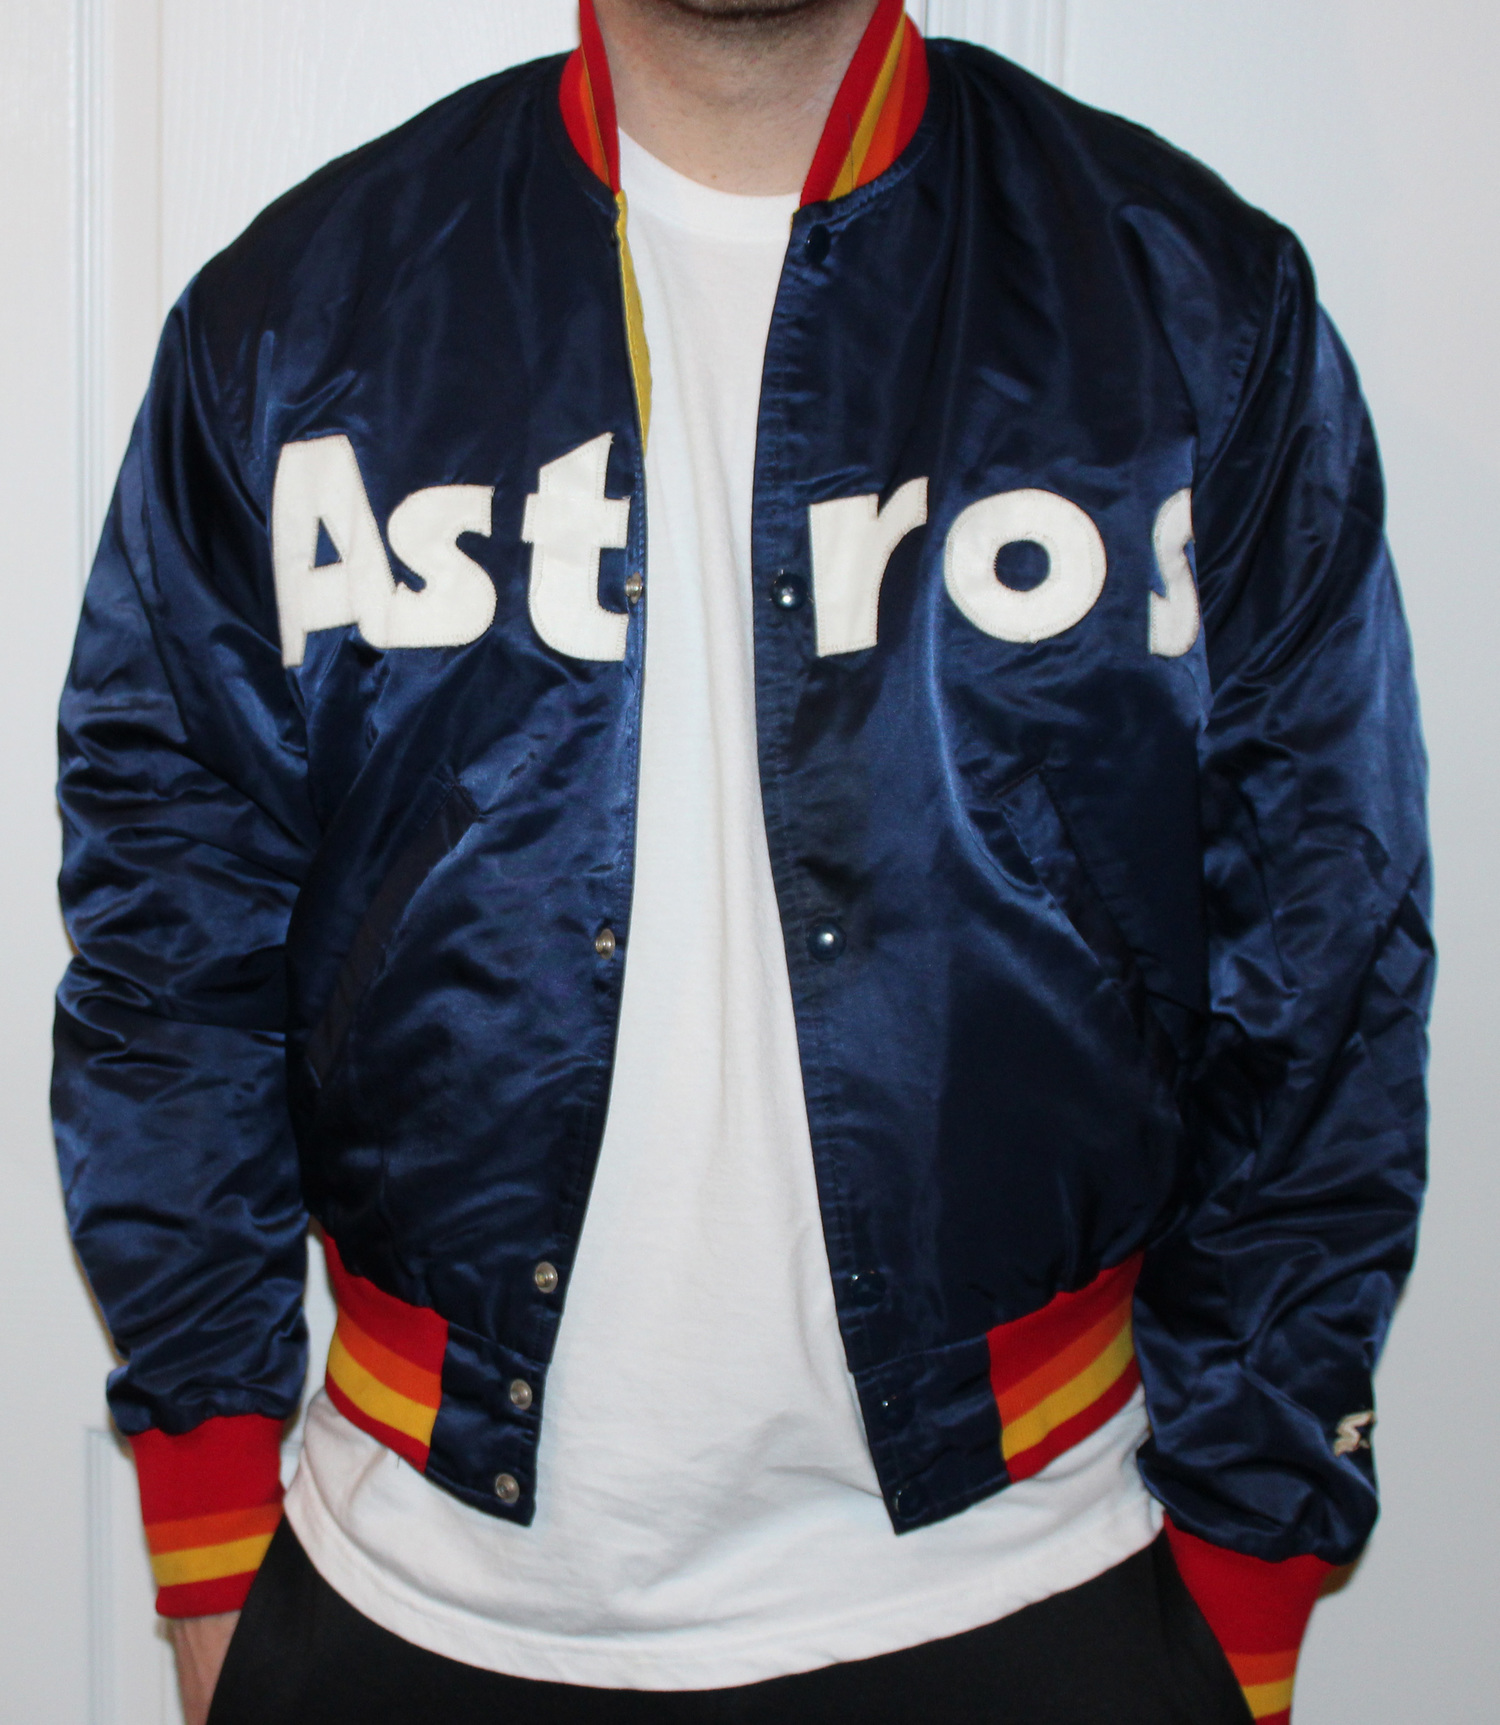 astros starter jacket